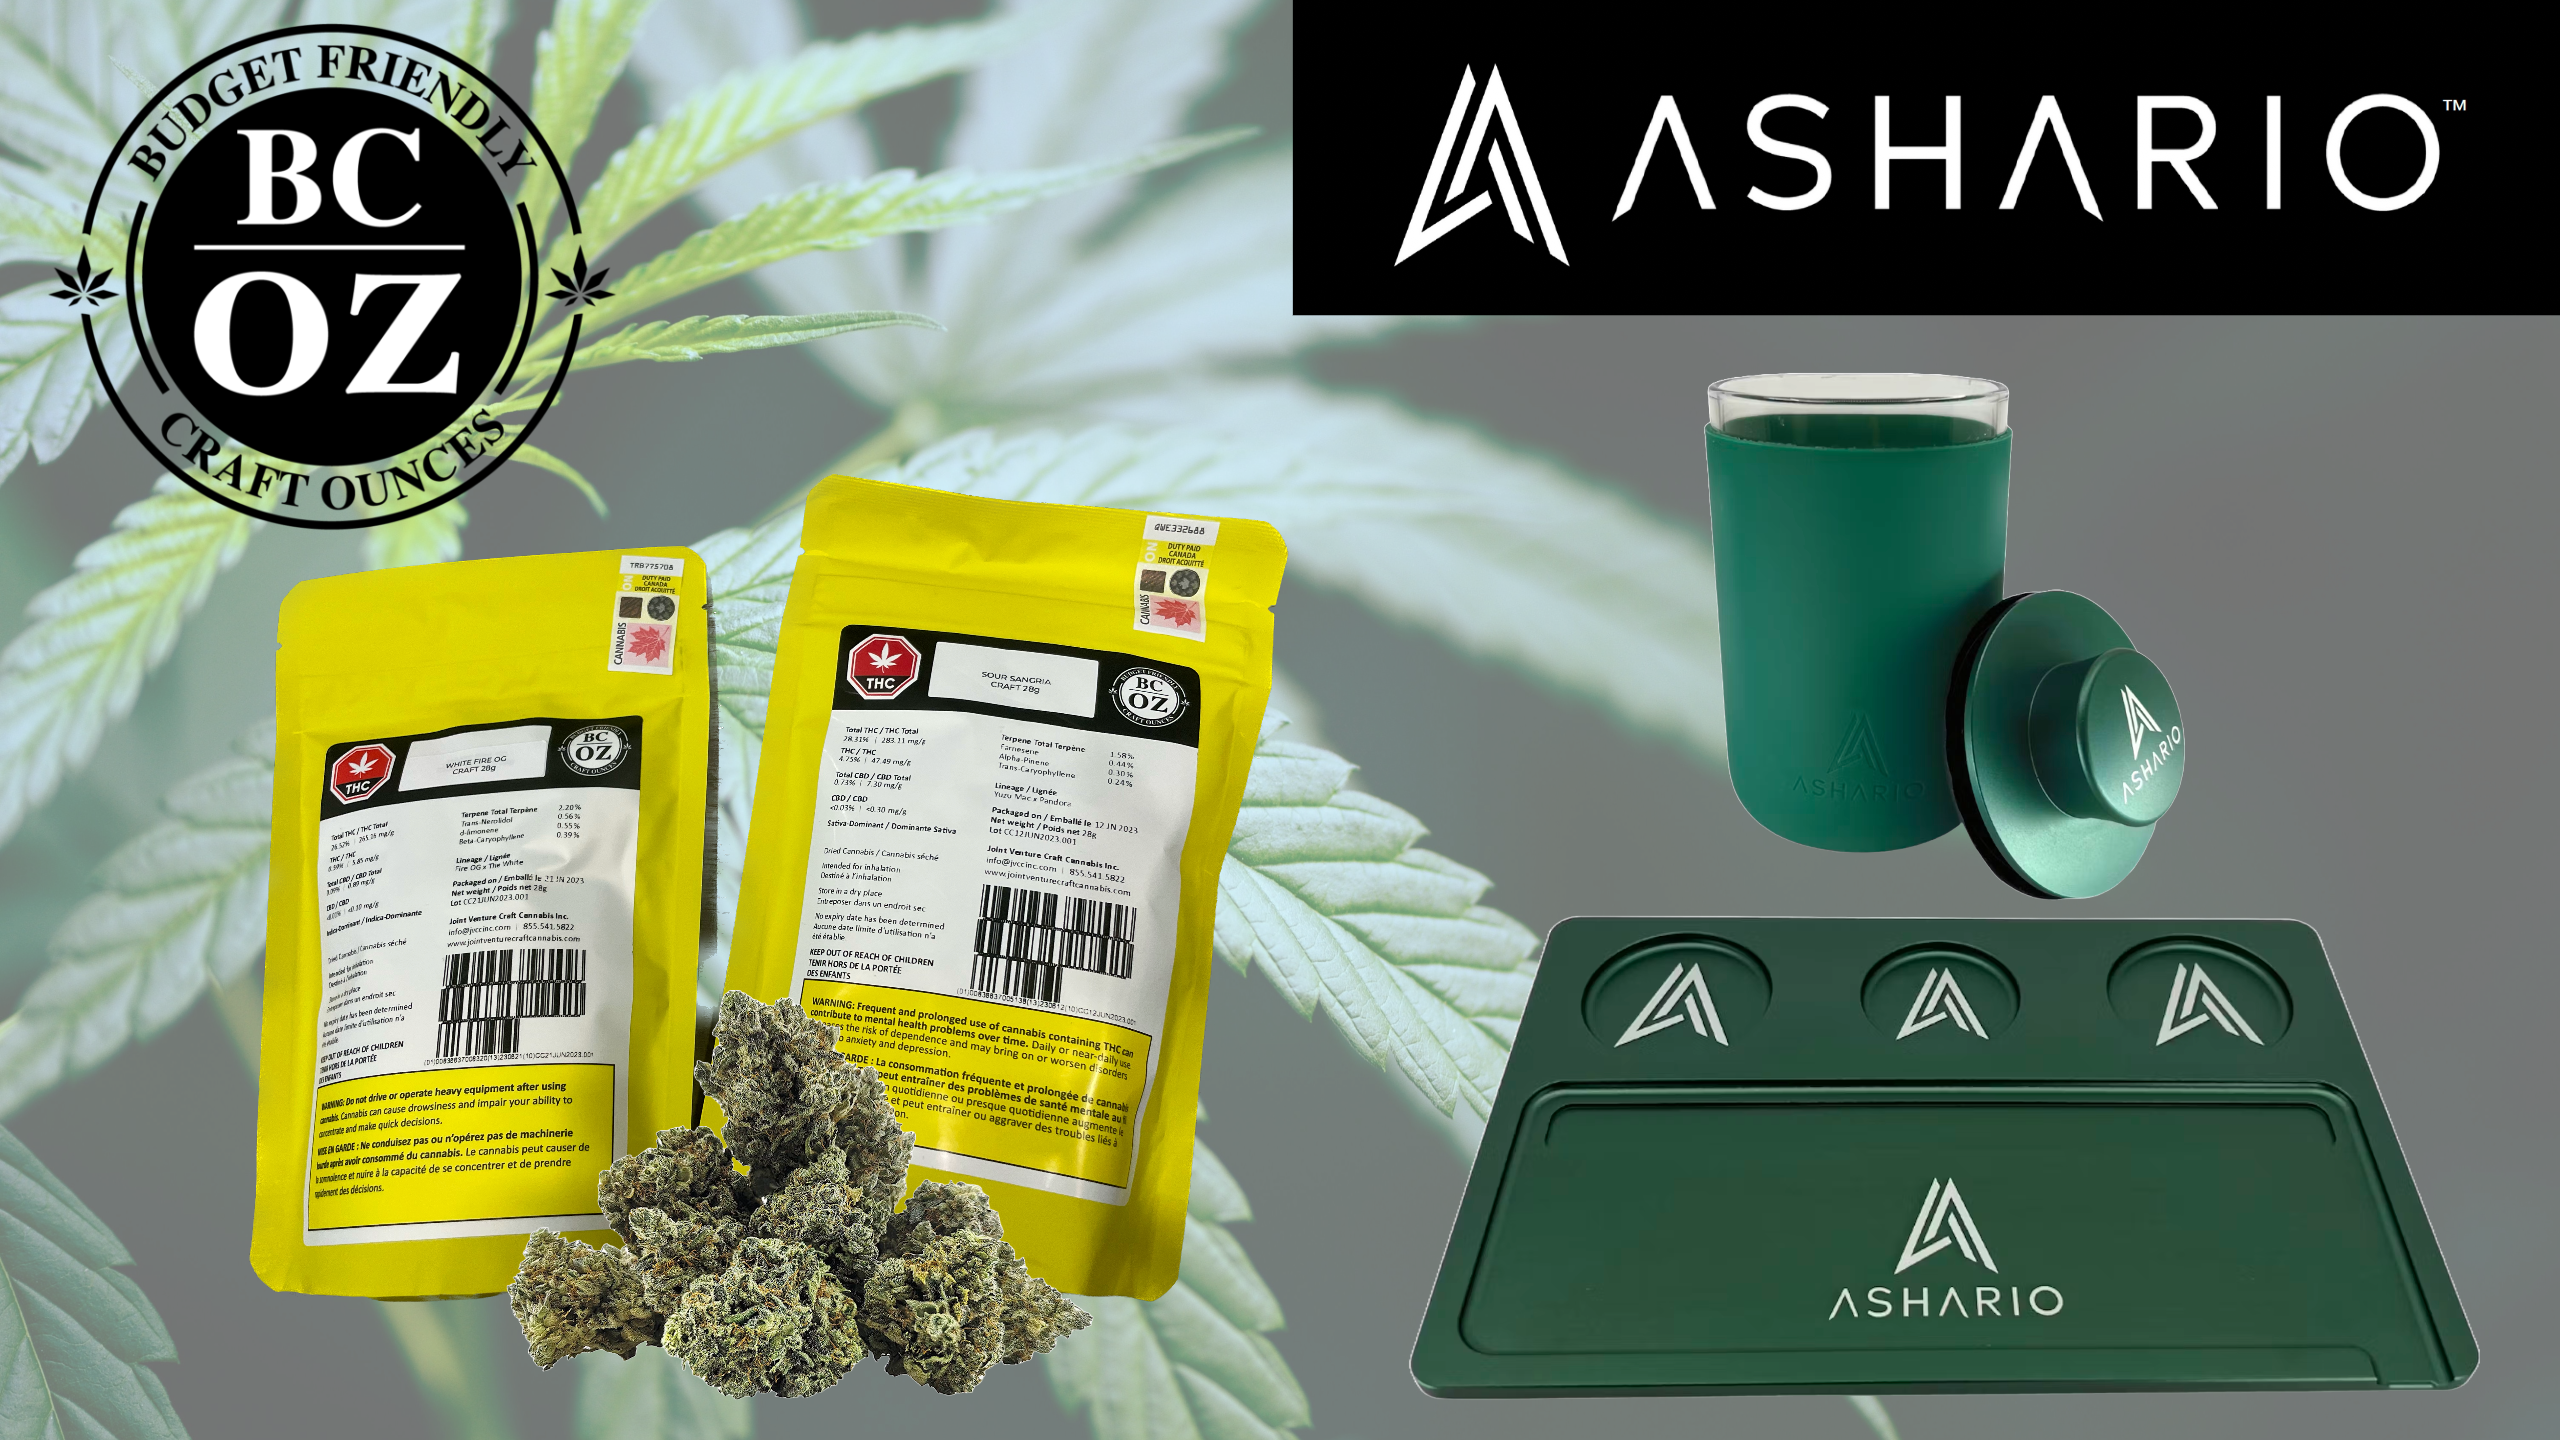 Ashario Cannabis Brand Spotlight: BC OZ